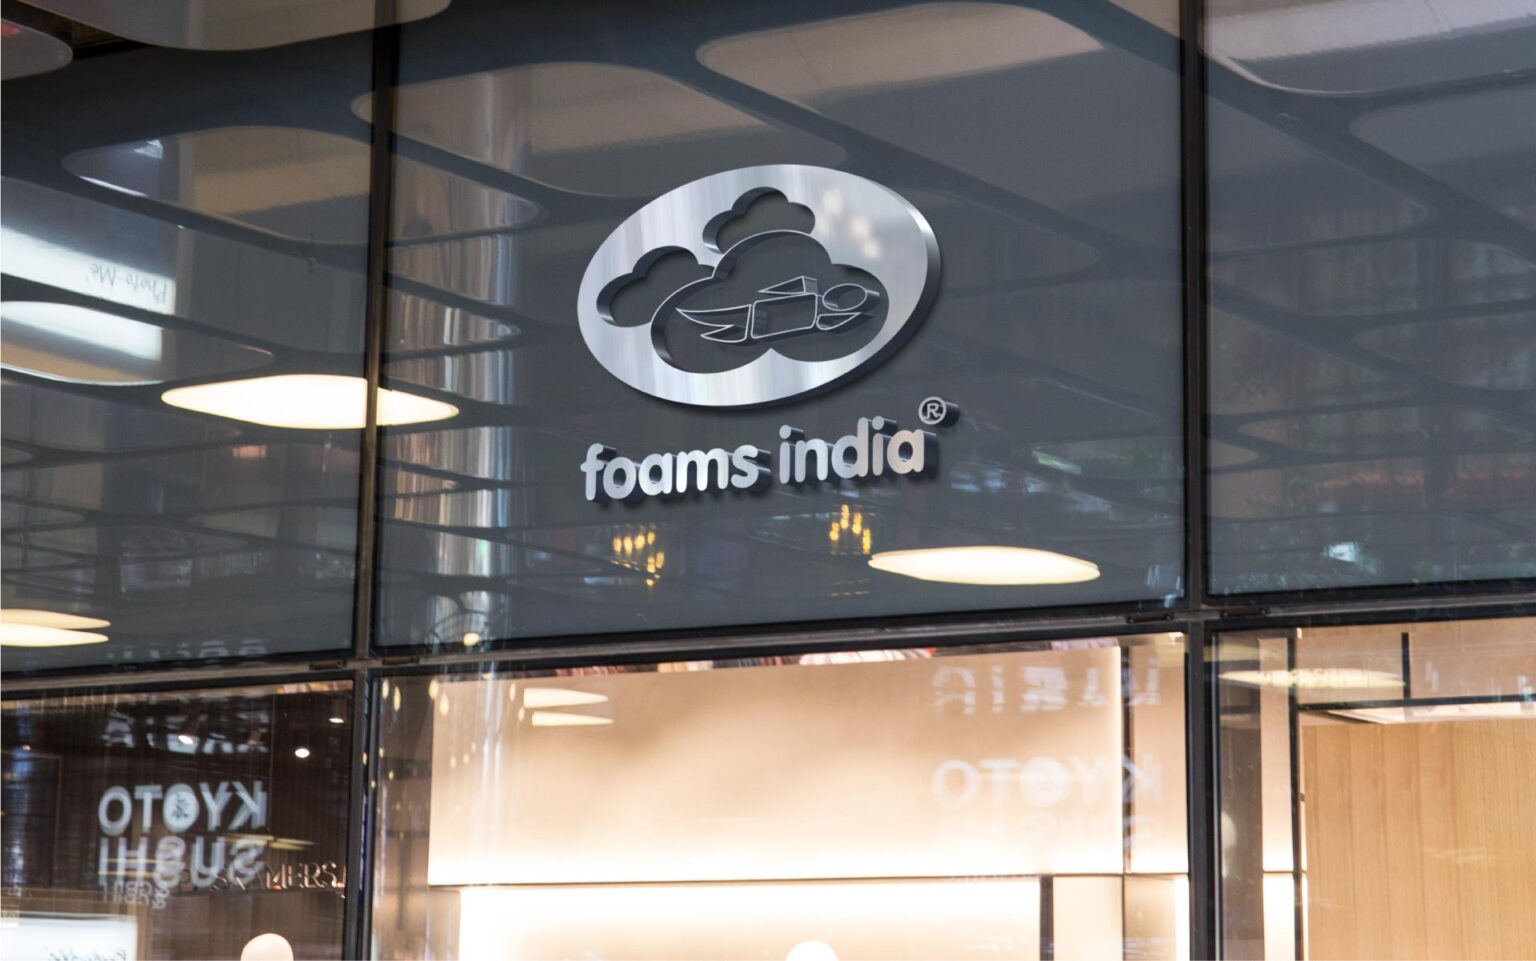 foams india mattress review